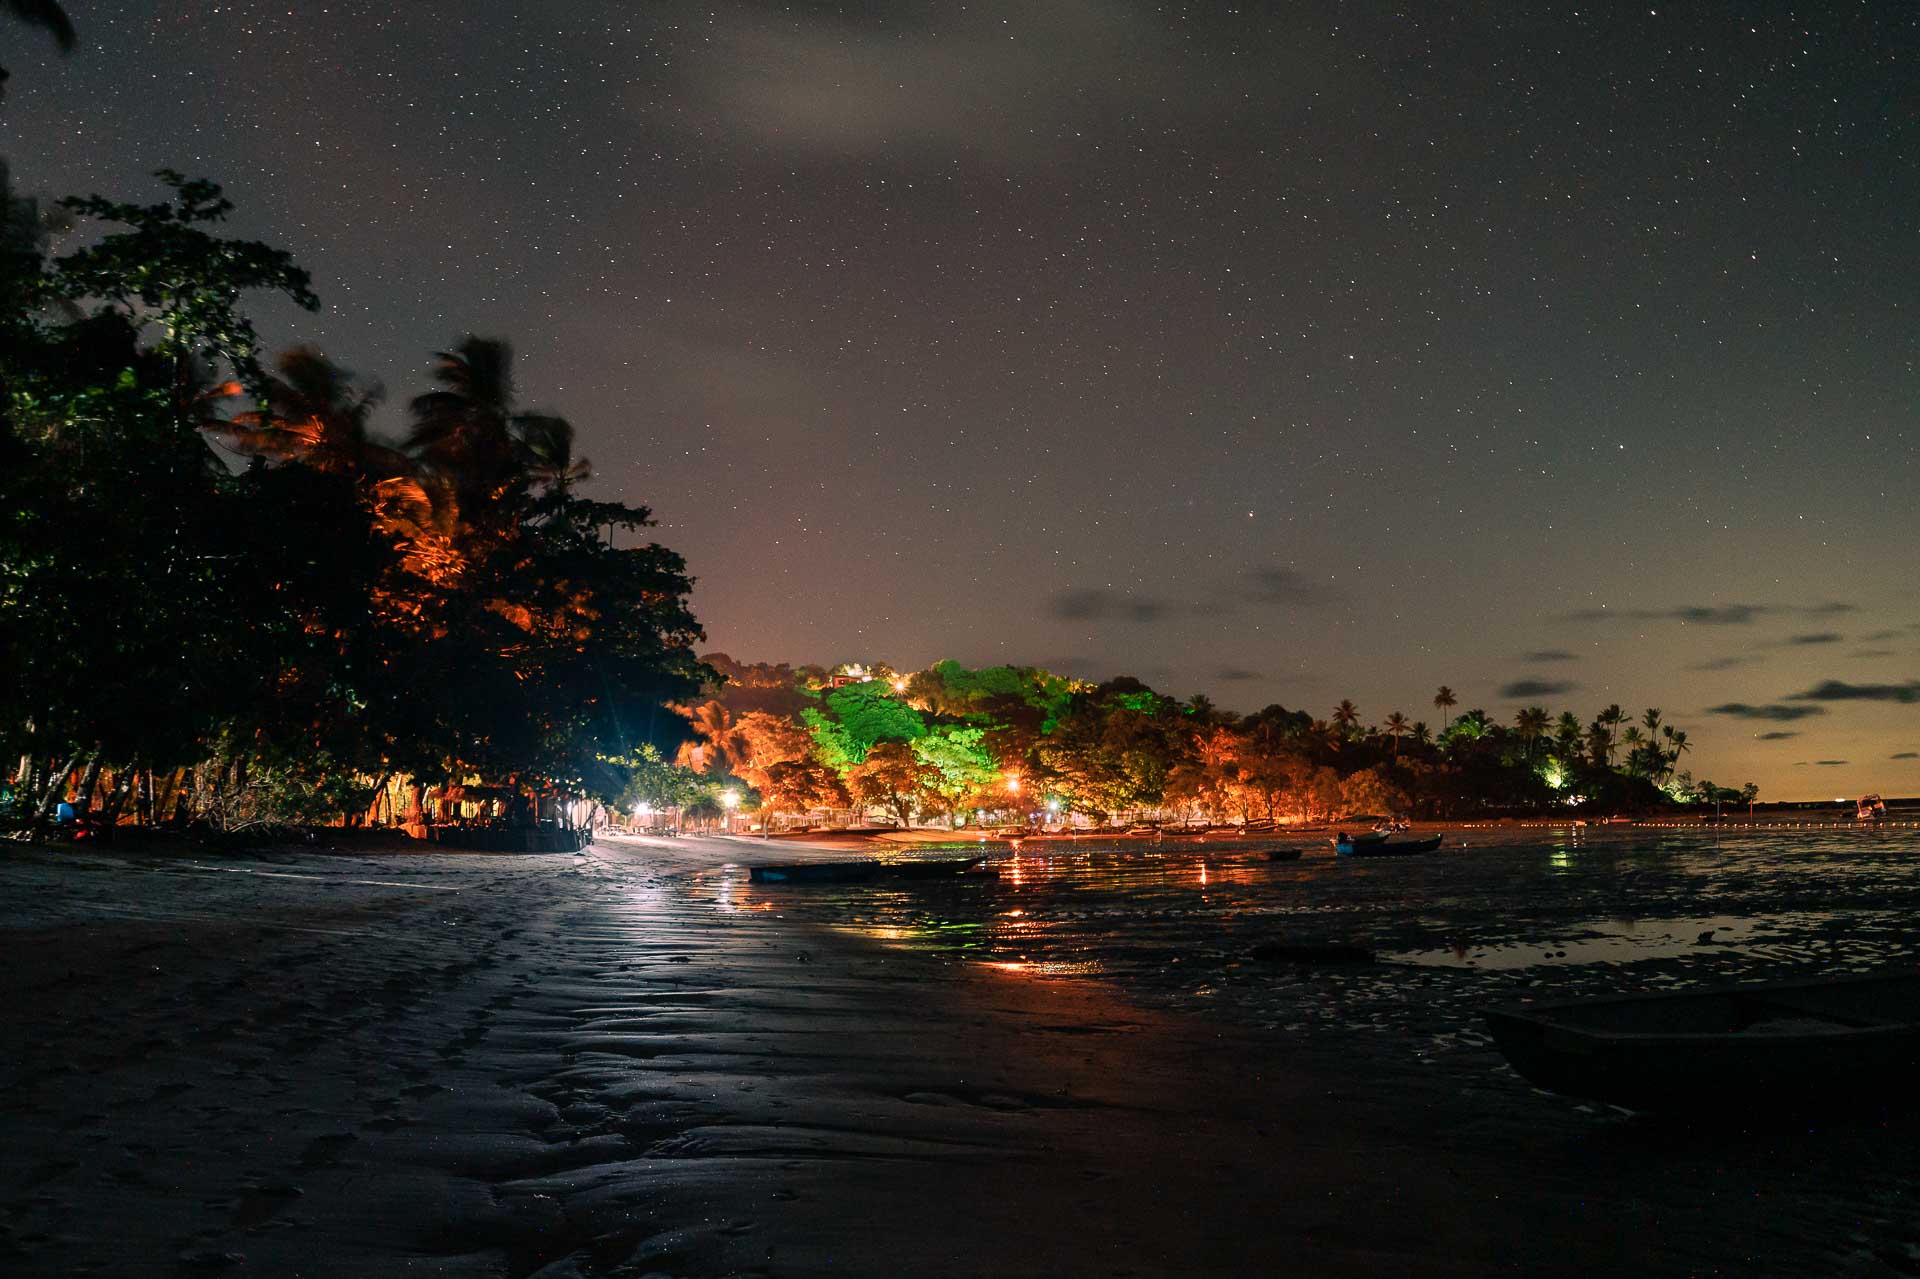 night life of Boipeba Brazil with beach stalls and a sky full of stars